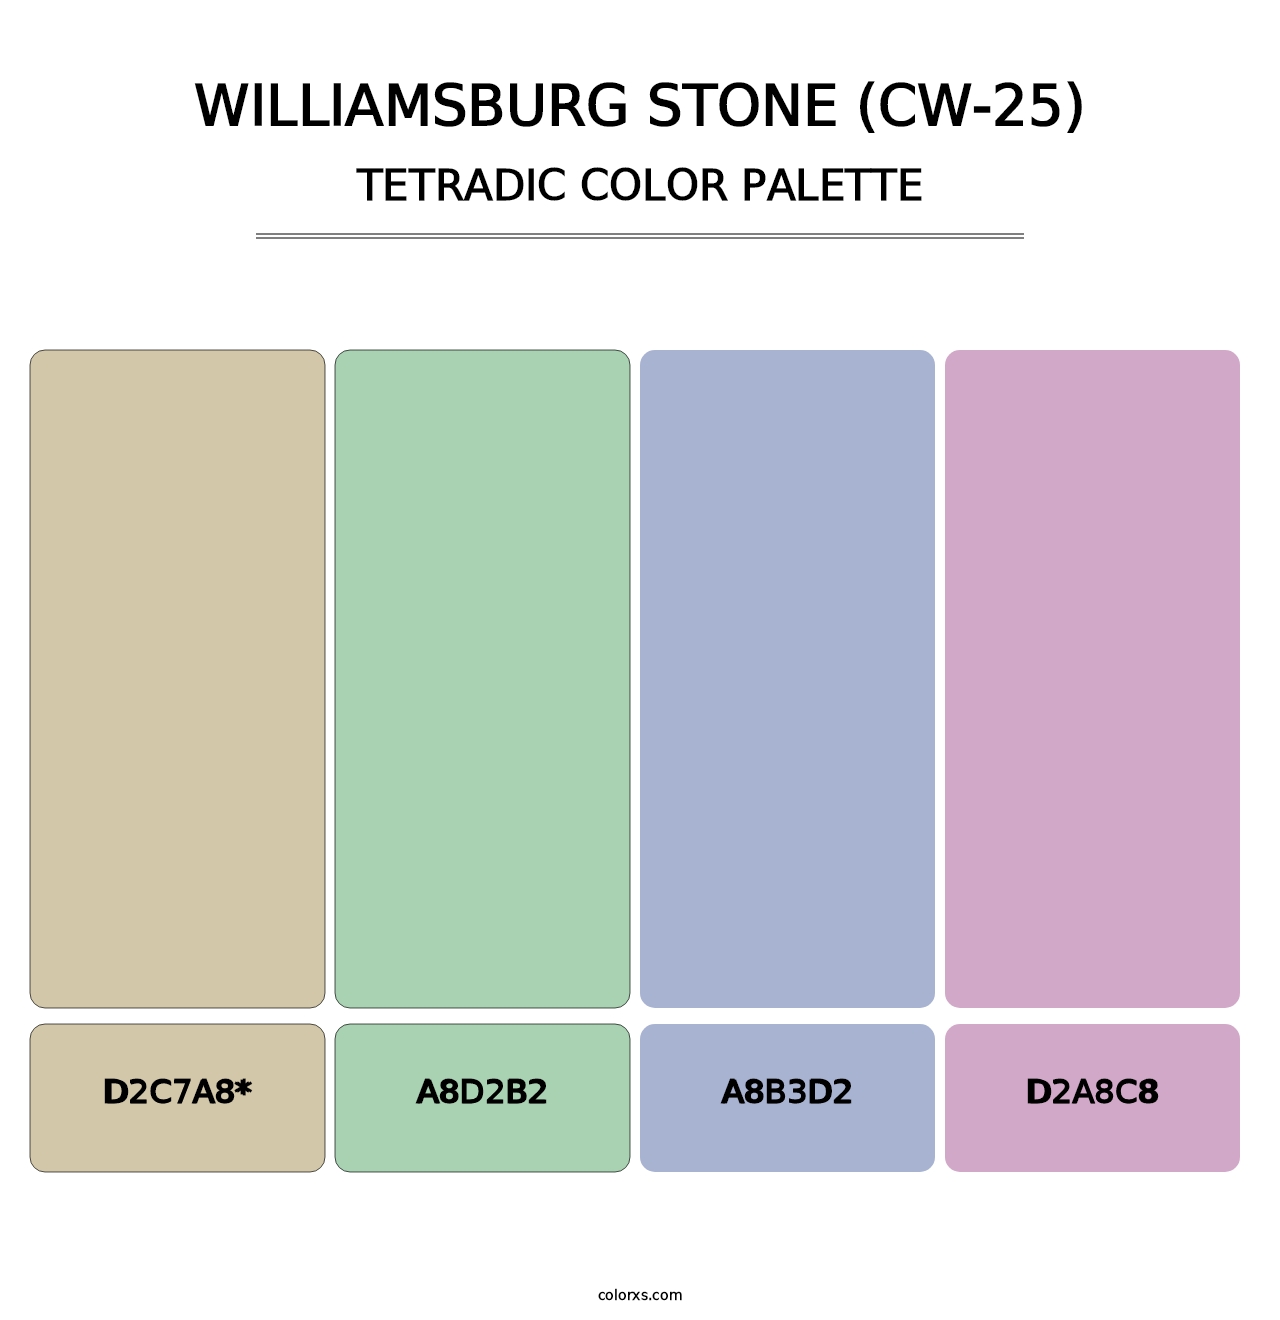 Williamsburg Stone (CW-25) - Tetradic Color Palette